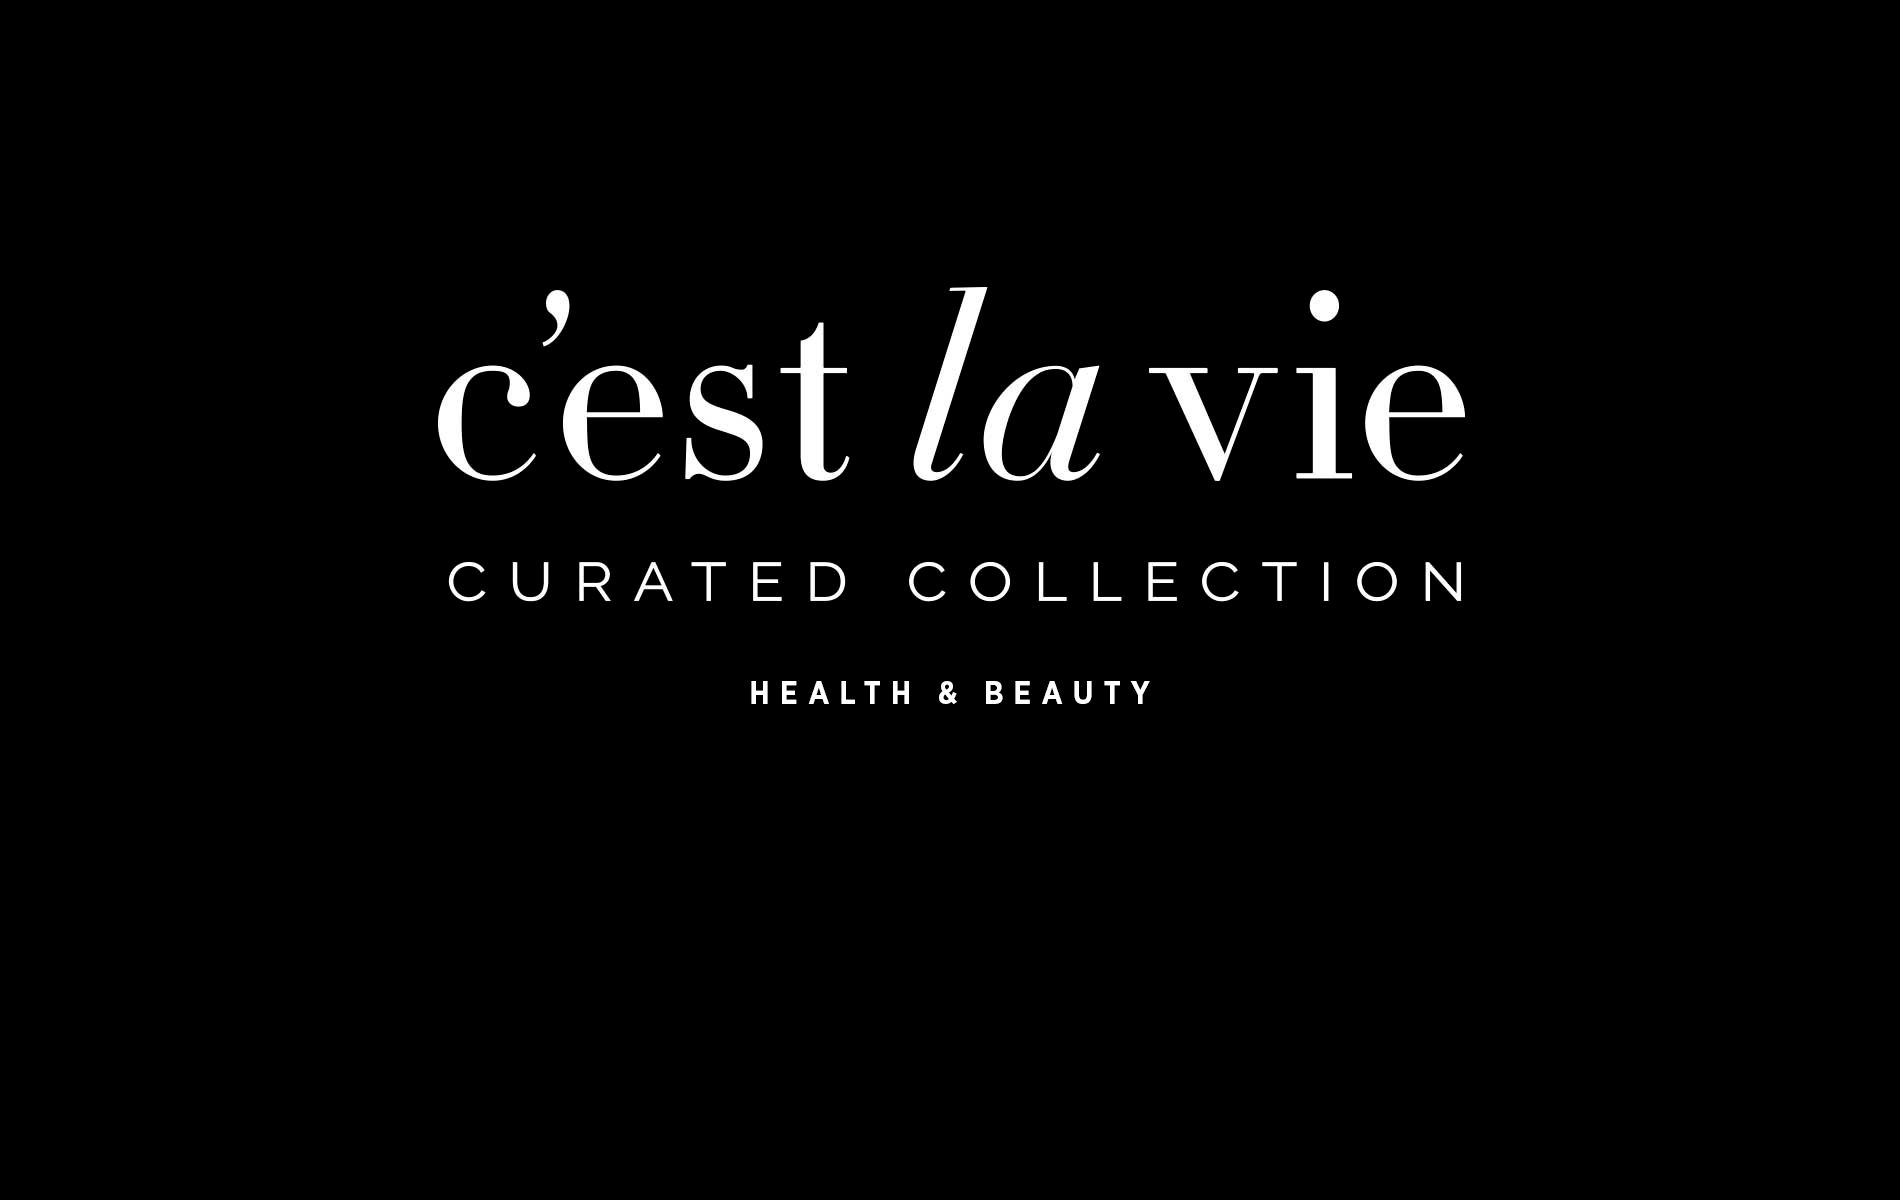 c'est la vie health and beauty VIE Magazine january 2017 luxury products